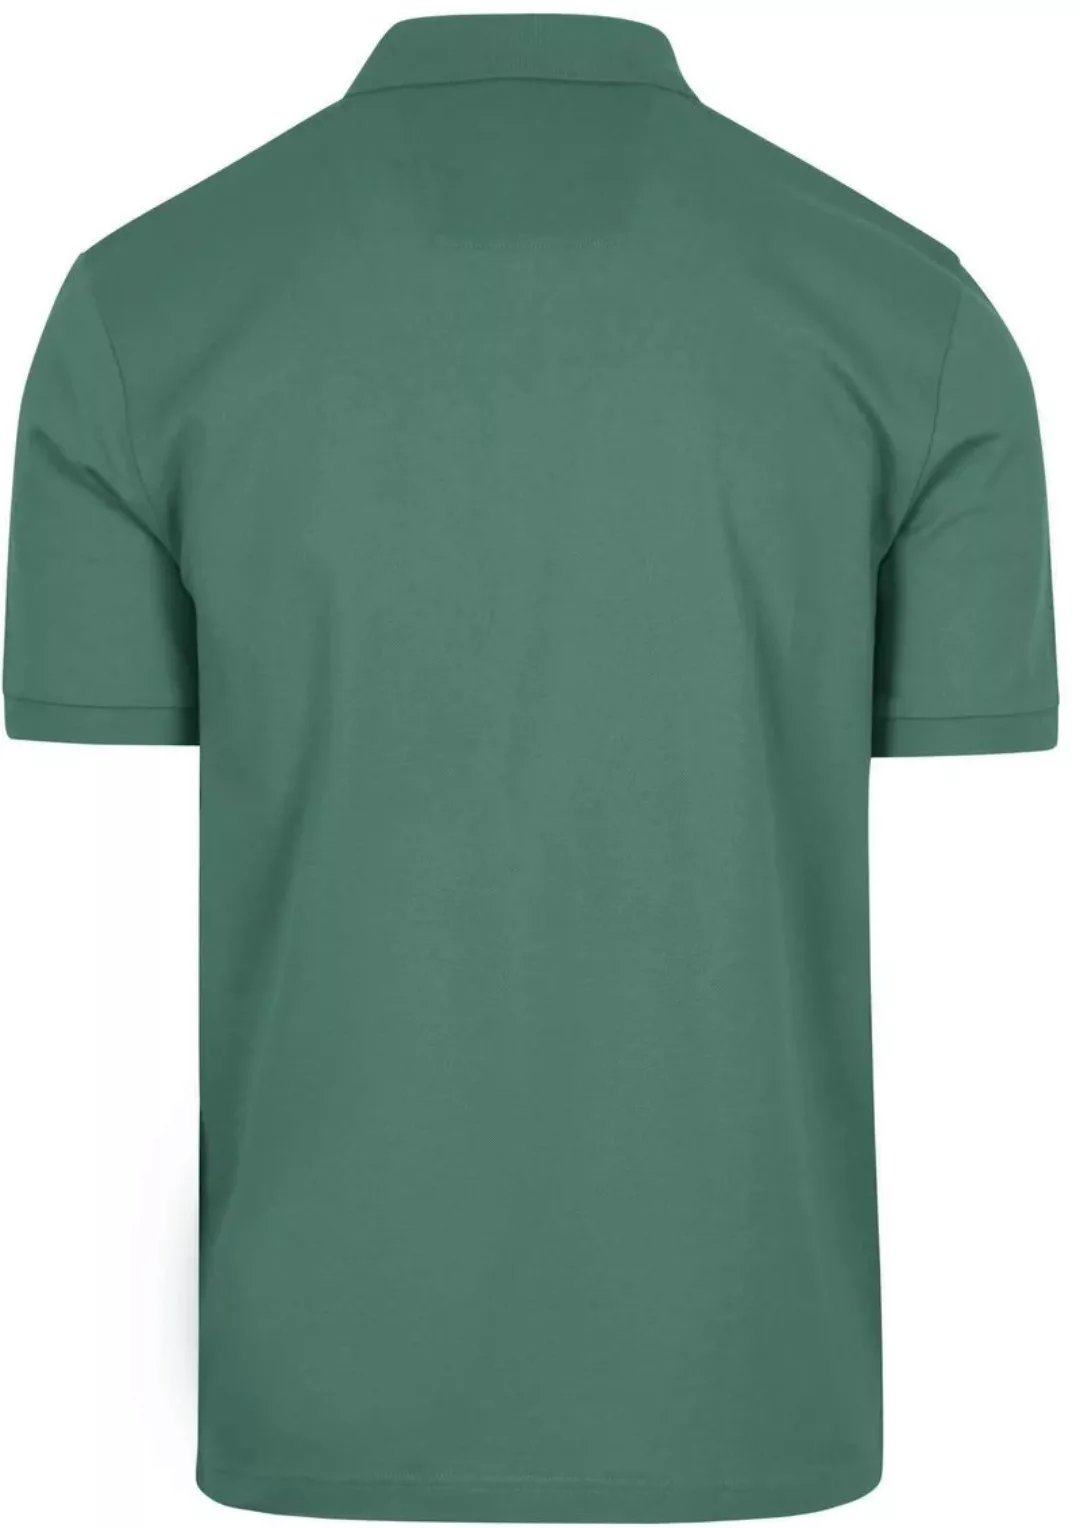 OLYMP Poloshirt Piqué Grün - Größe M günstig online kaufen